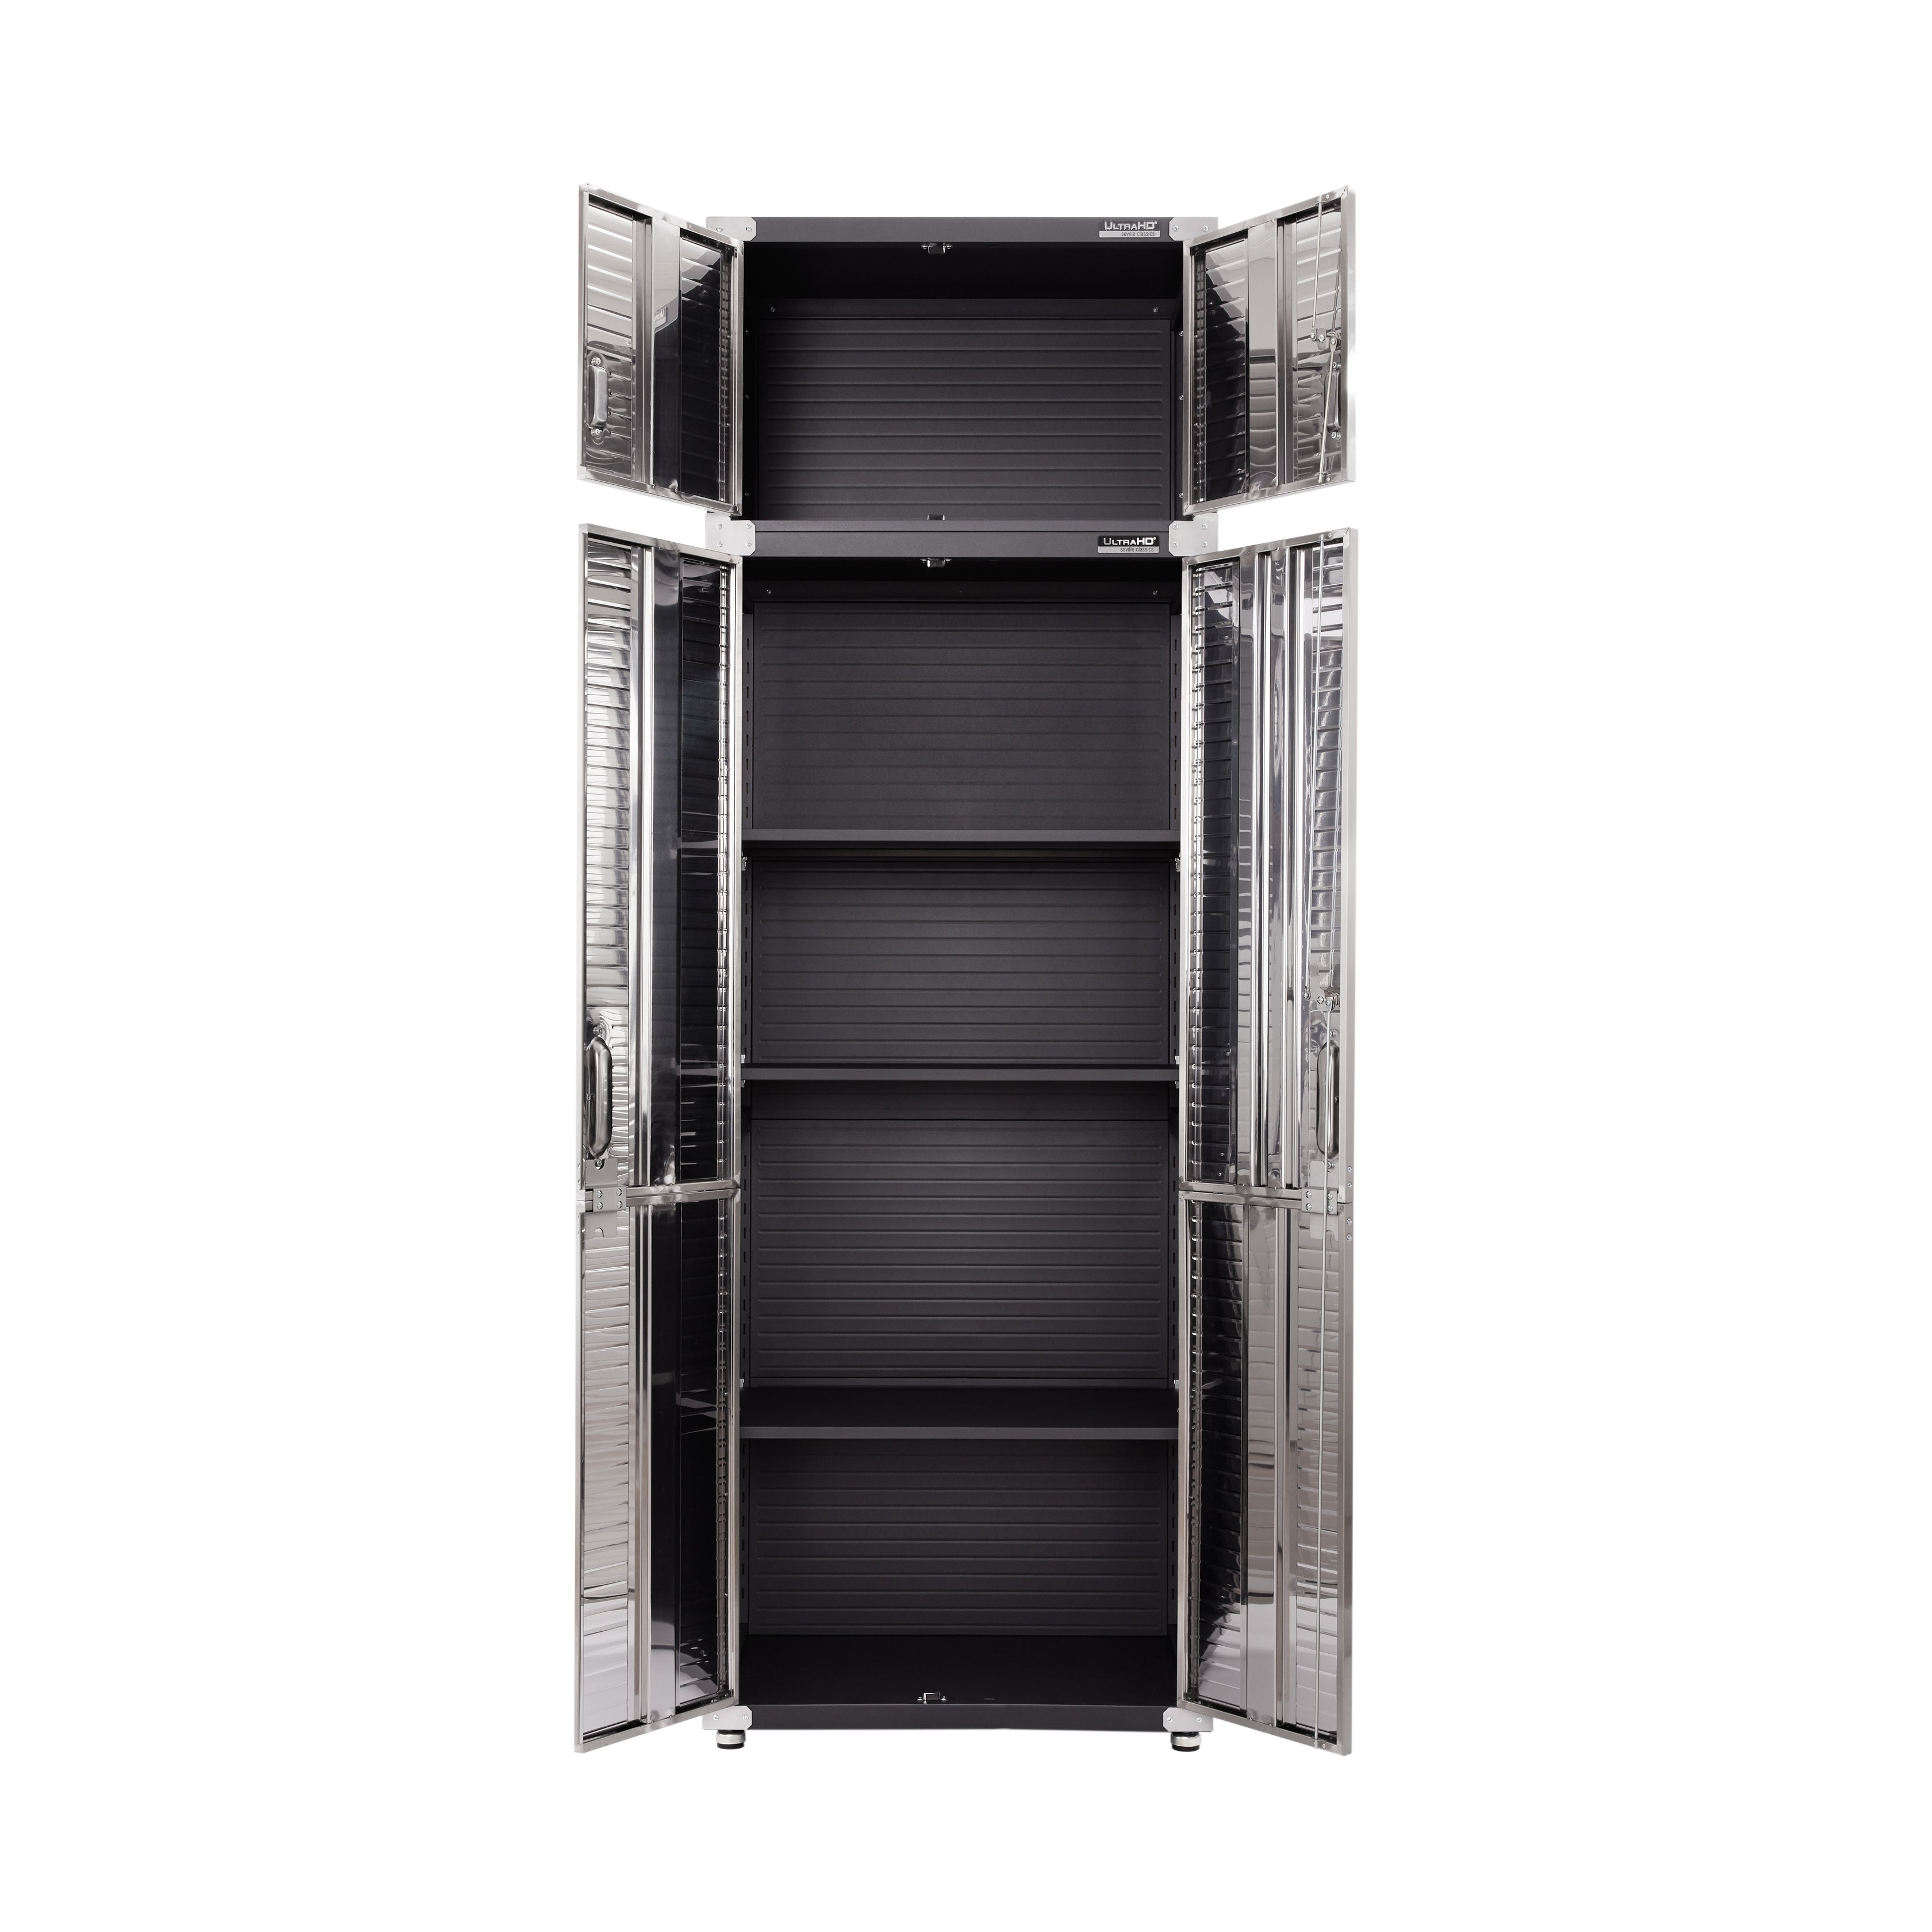 Seville Classics UltraHD 6-Piece Steel Garage Cabinet Storage Set